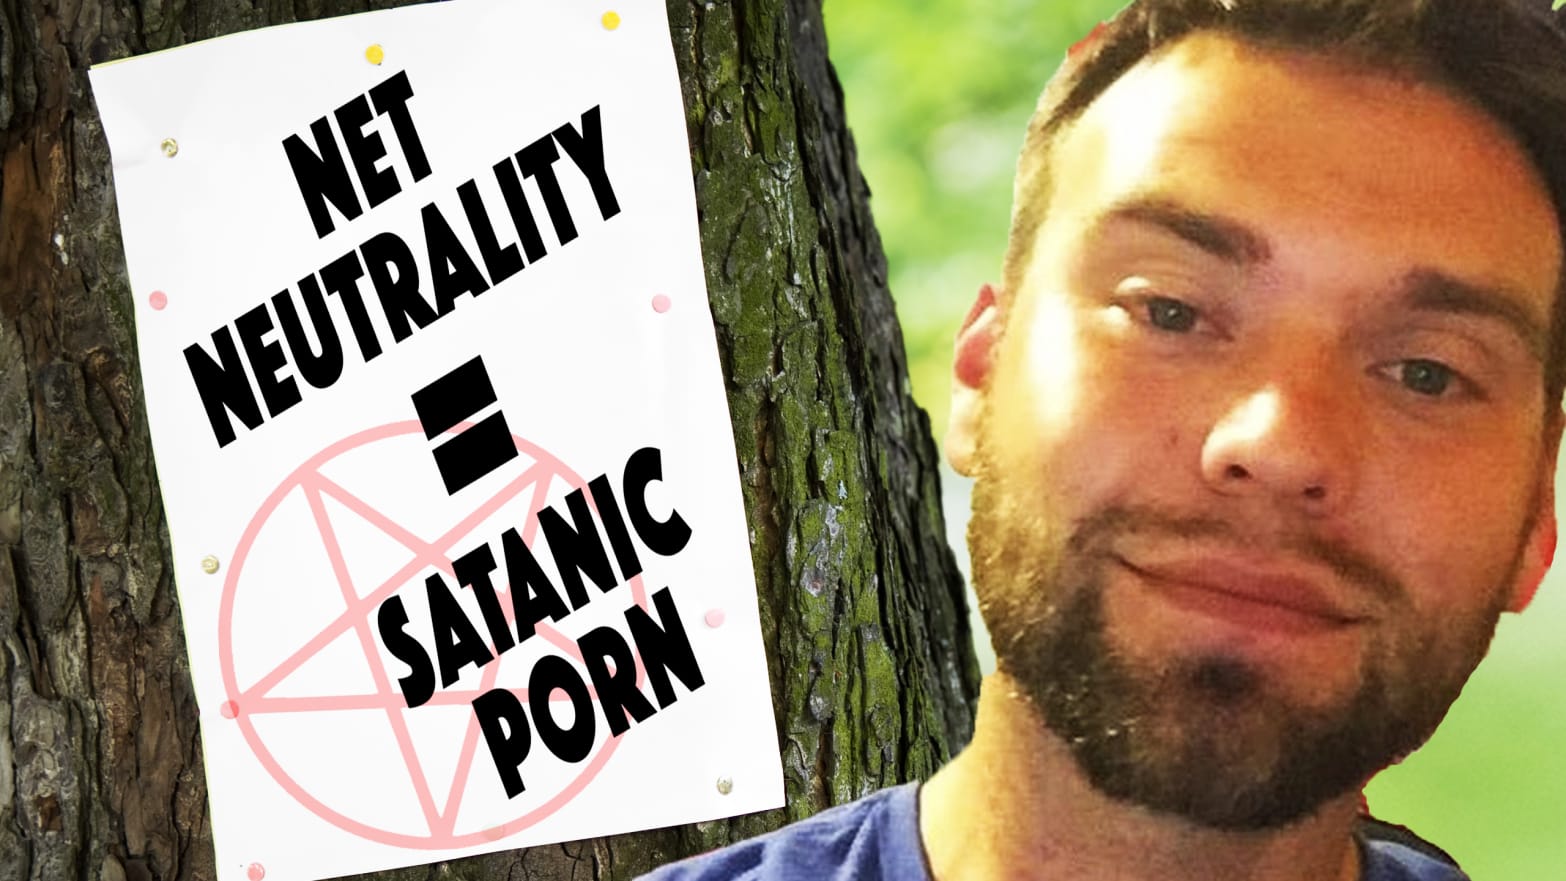 Satanic Porn - Alt-Right Claims Net Neutrality Promotes 'Satanic Porn' in ...